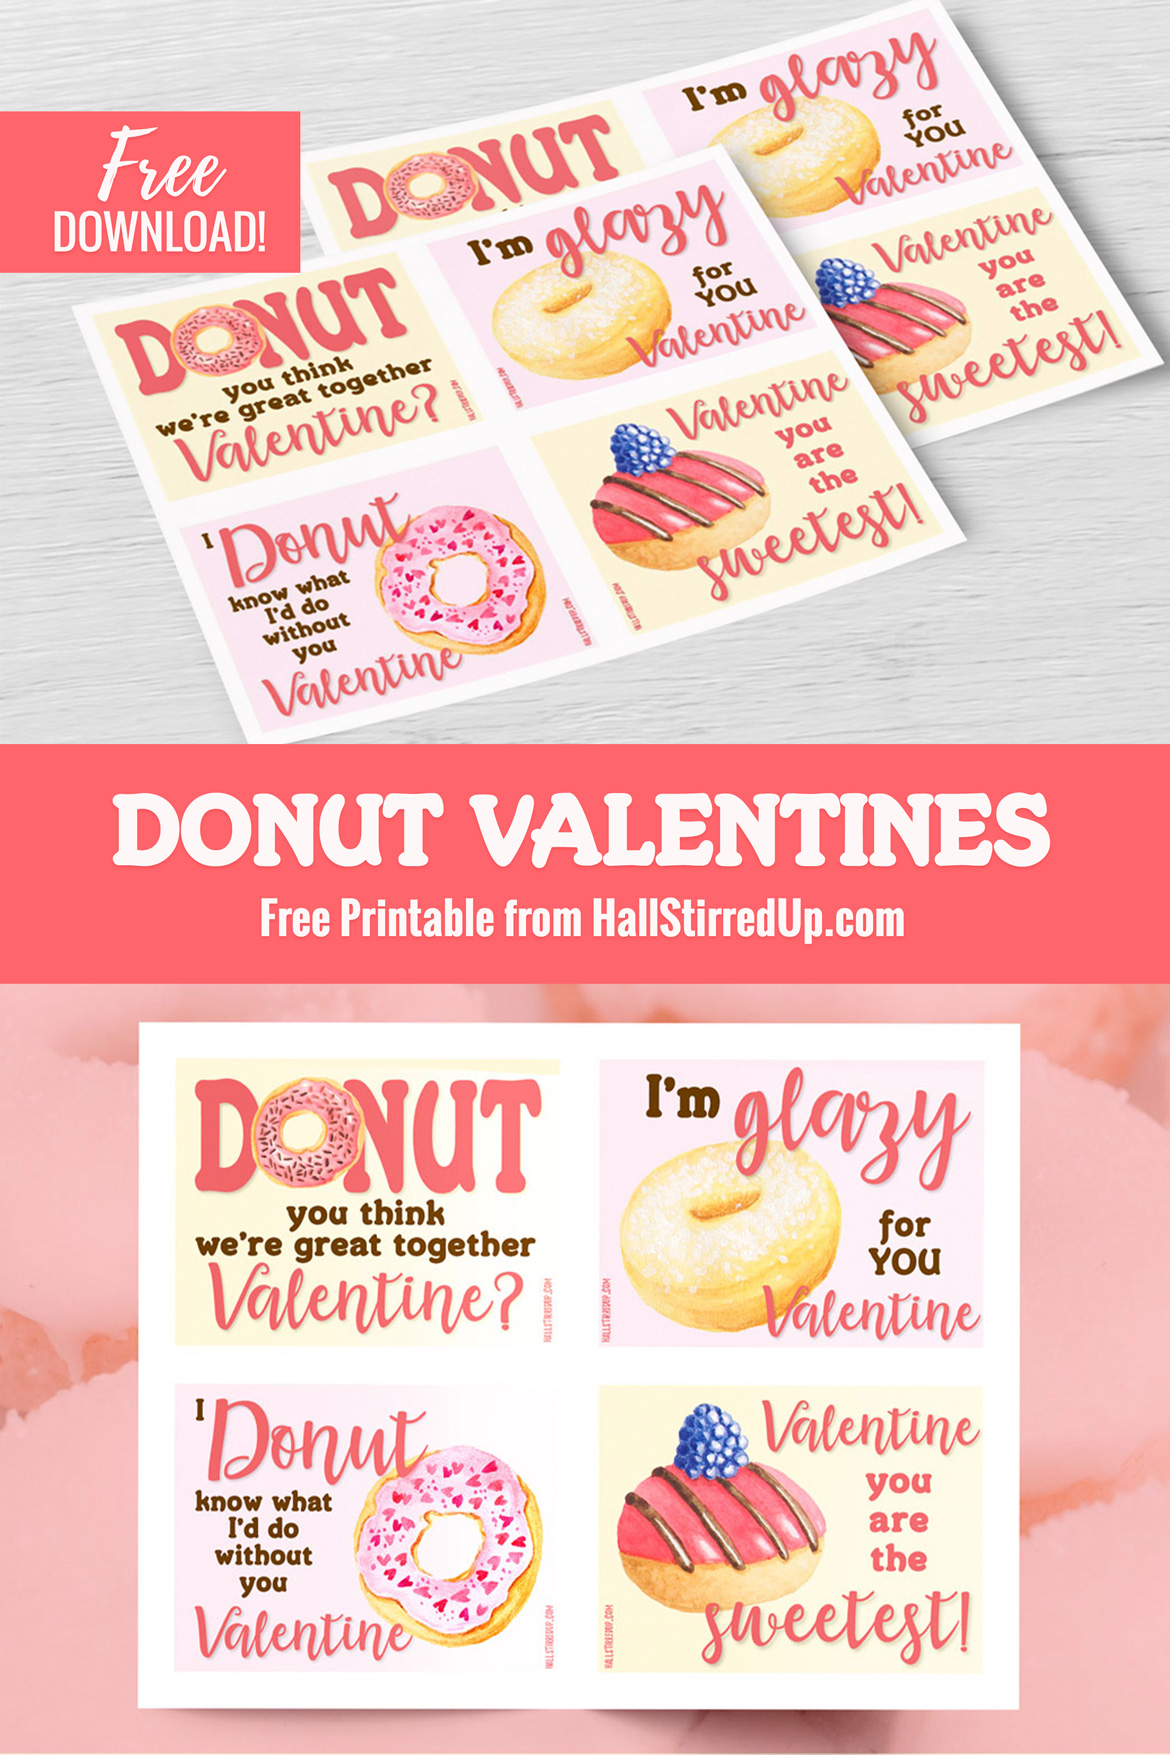 DONUT miss this fun Valentine printable